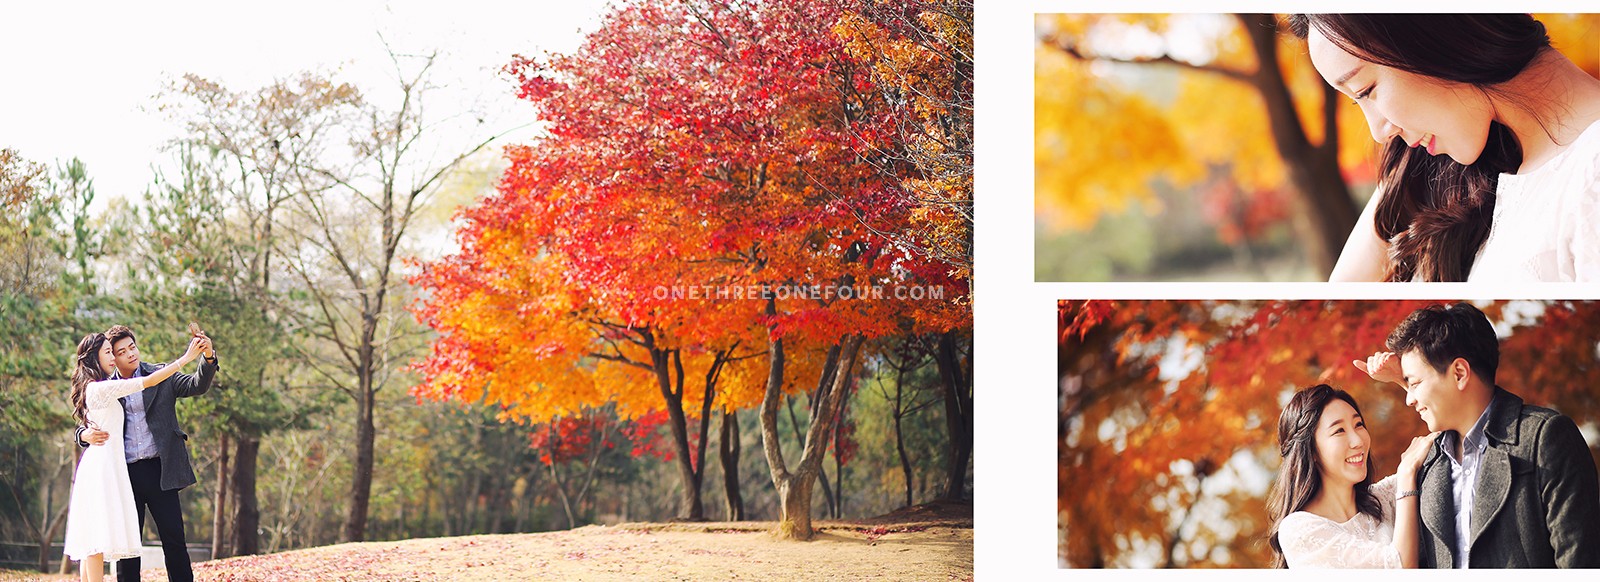 Korean Outdoor Autumn Date Snap by ePhoto Essay Studio on OneThreeOneFour 6